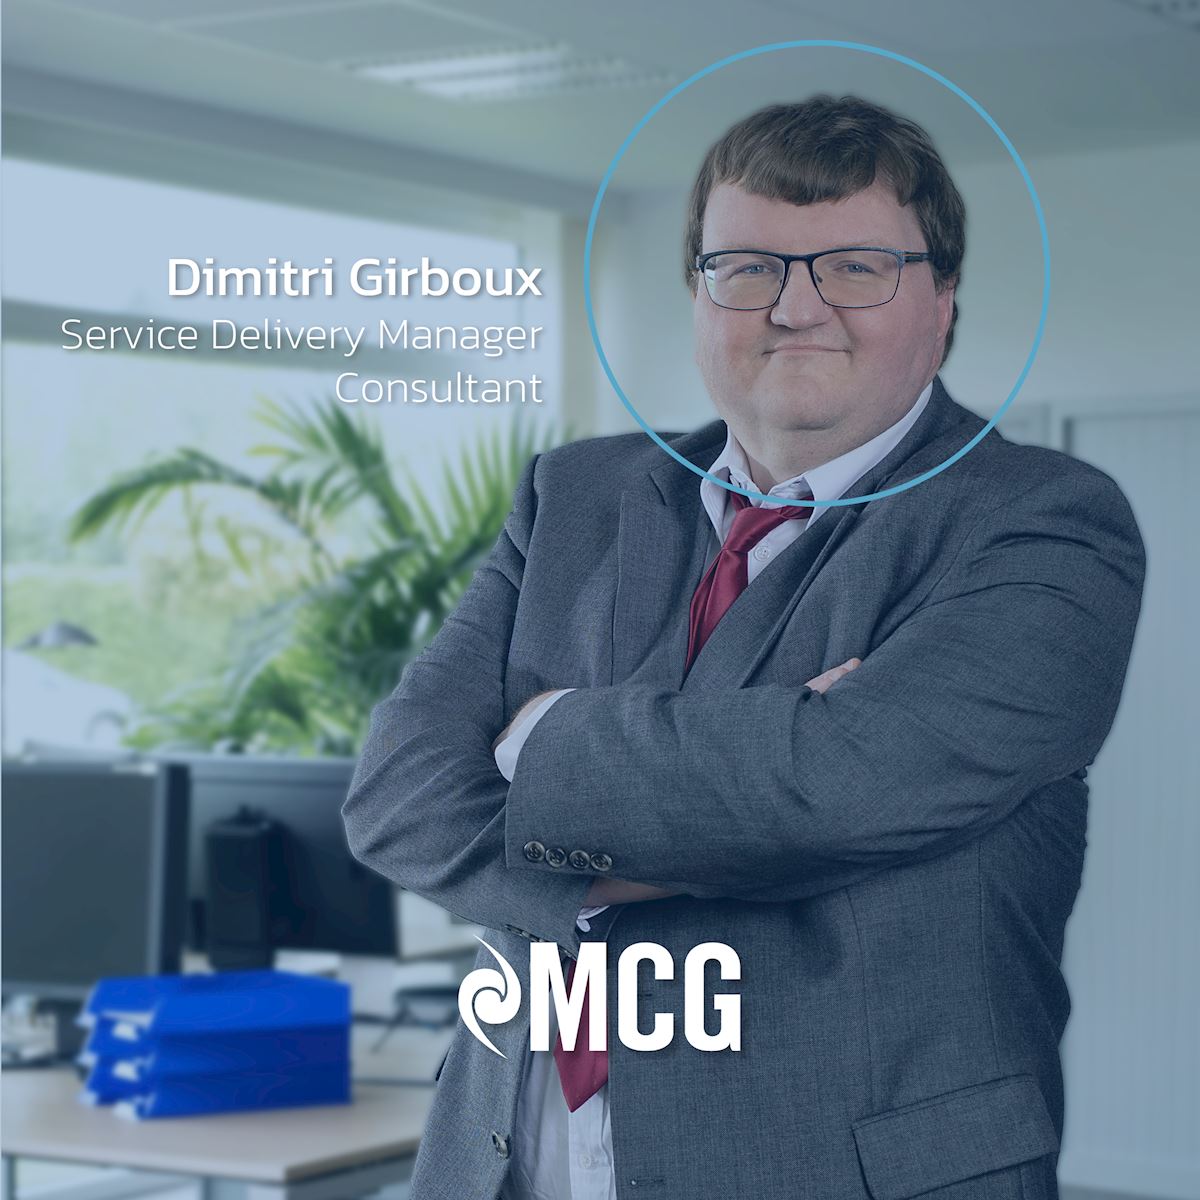 Meet our collaborator Dimitri Girboux